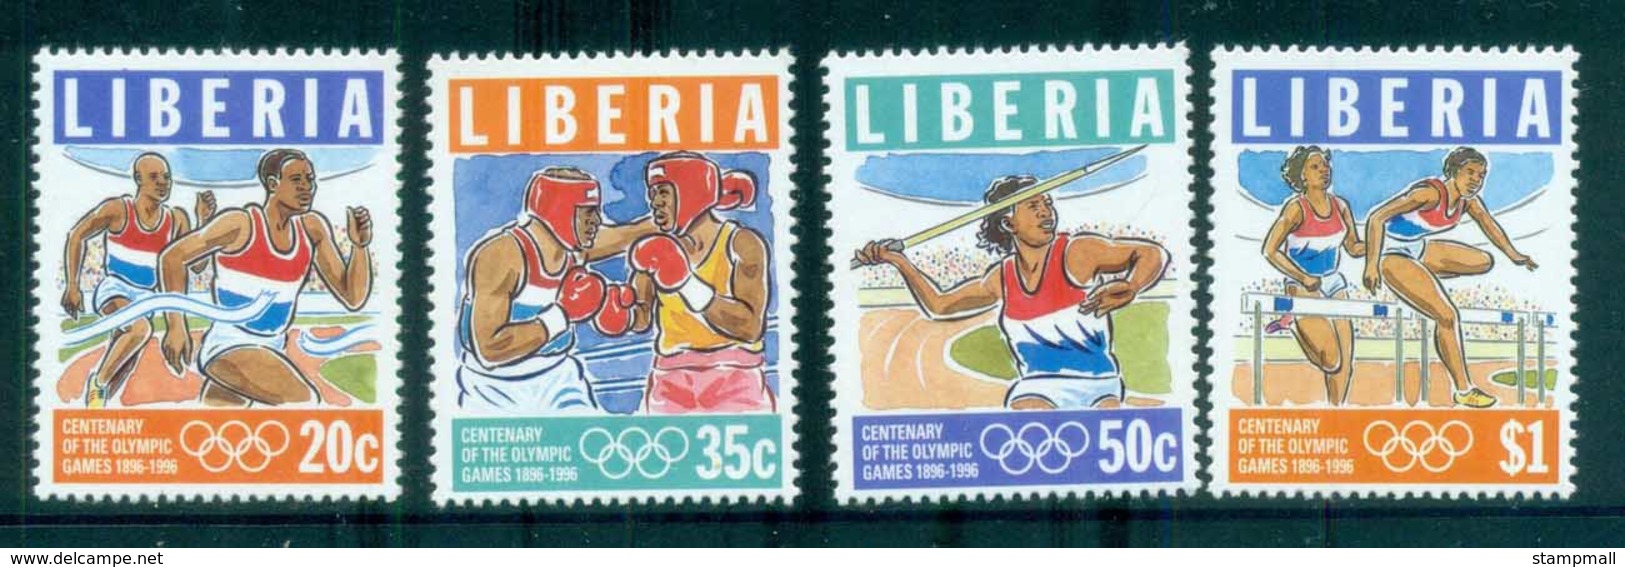 Liberia 1996 Modern Olympic Games Centenary MUH - Liberia